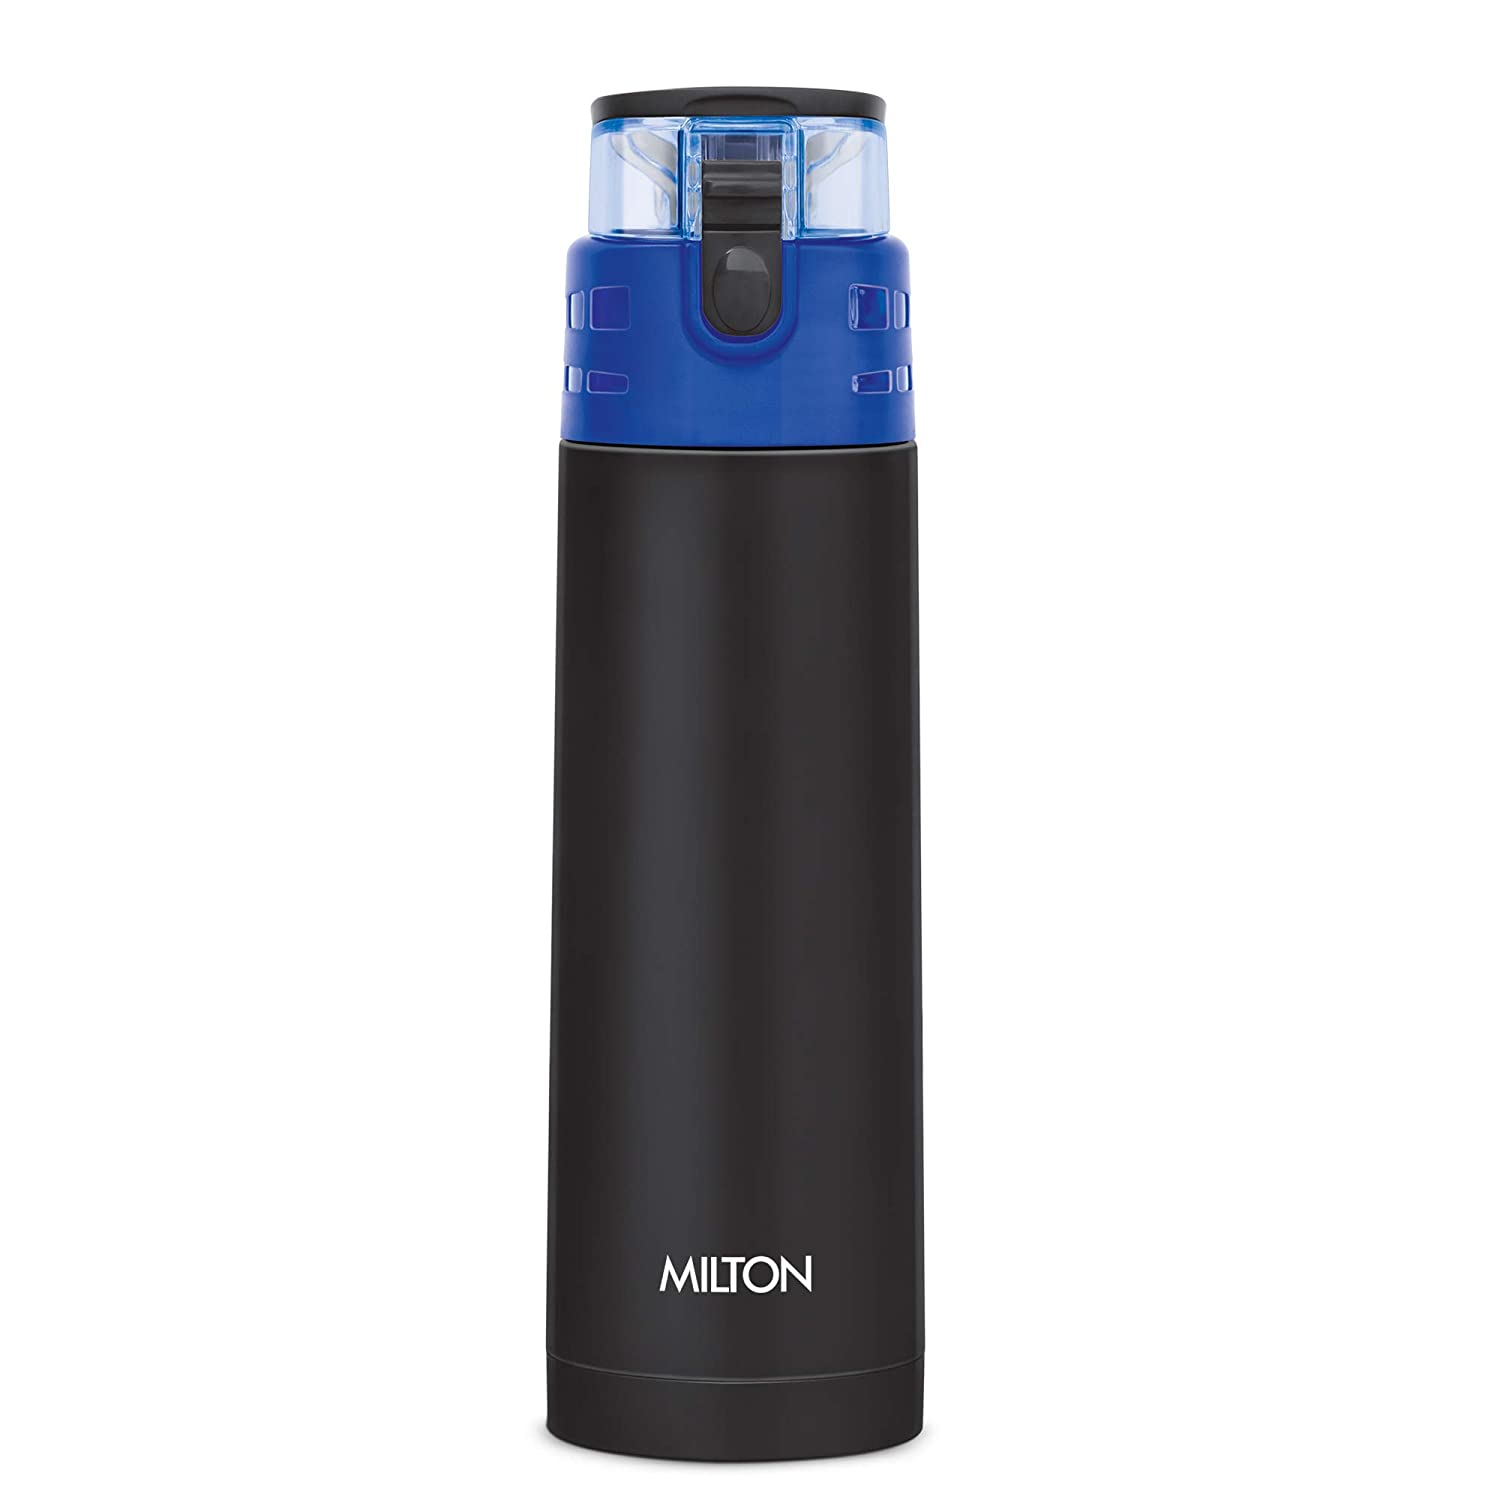 Milton Atlantis 600 thermosteel water bottle 